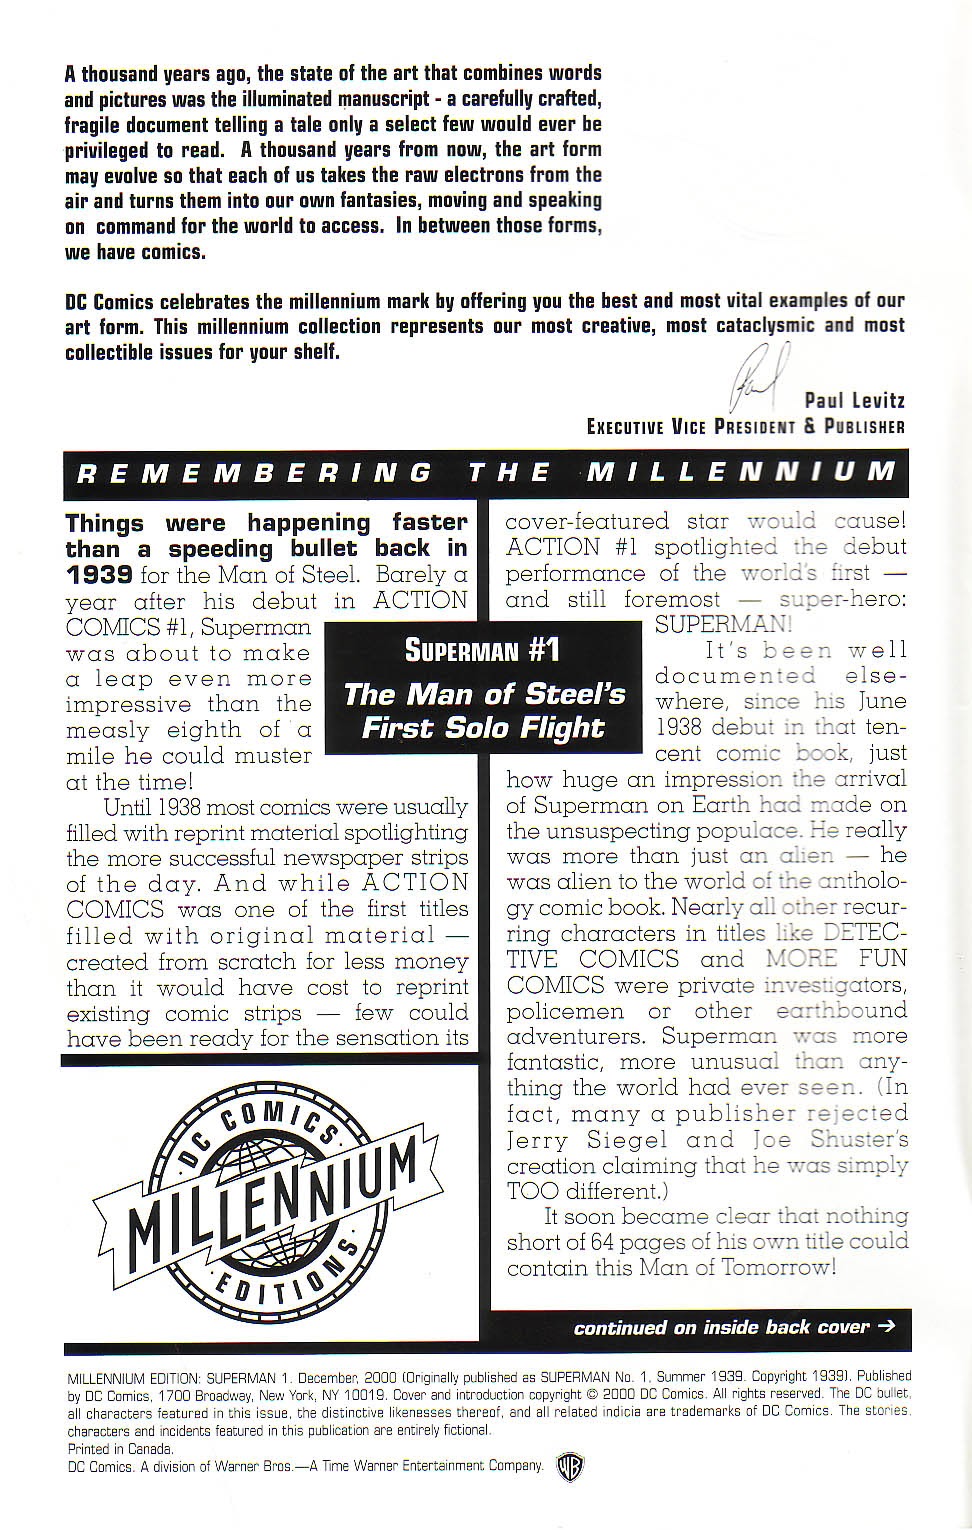 Read online Millennium Edition: Superman 1 comic -  Issue # Full - 2